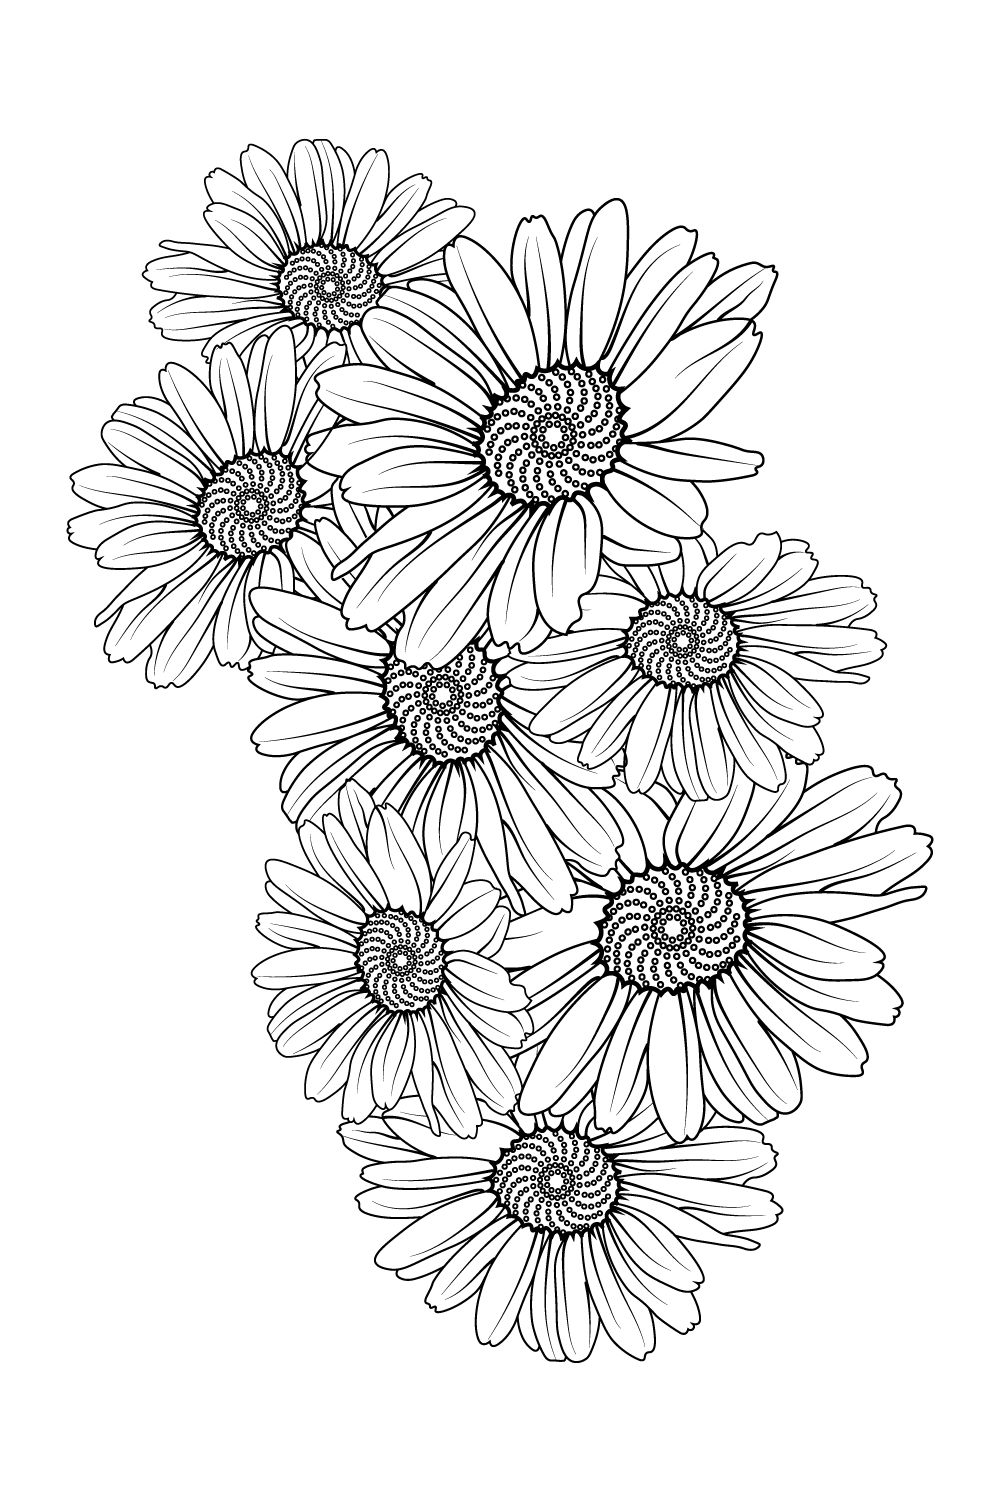 chloe skidmore share daisy tattoo black and white photos